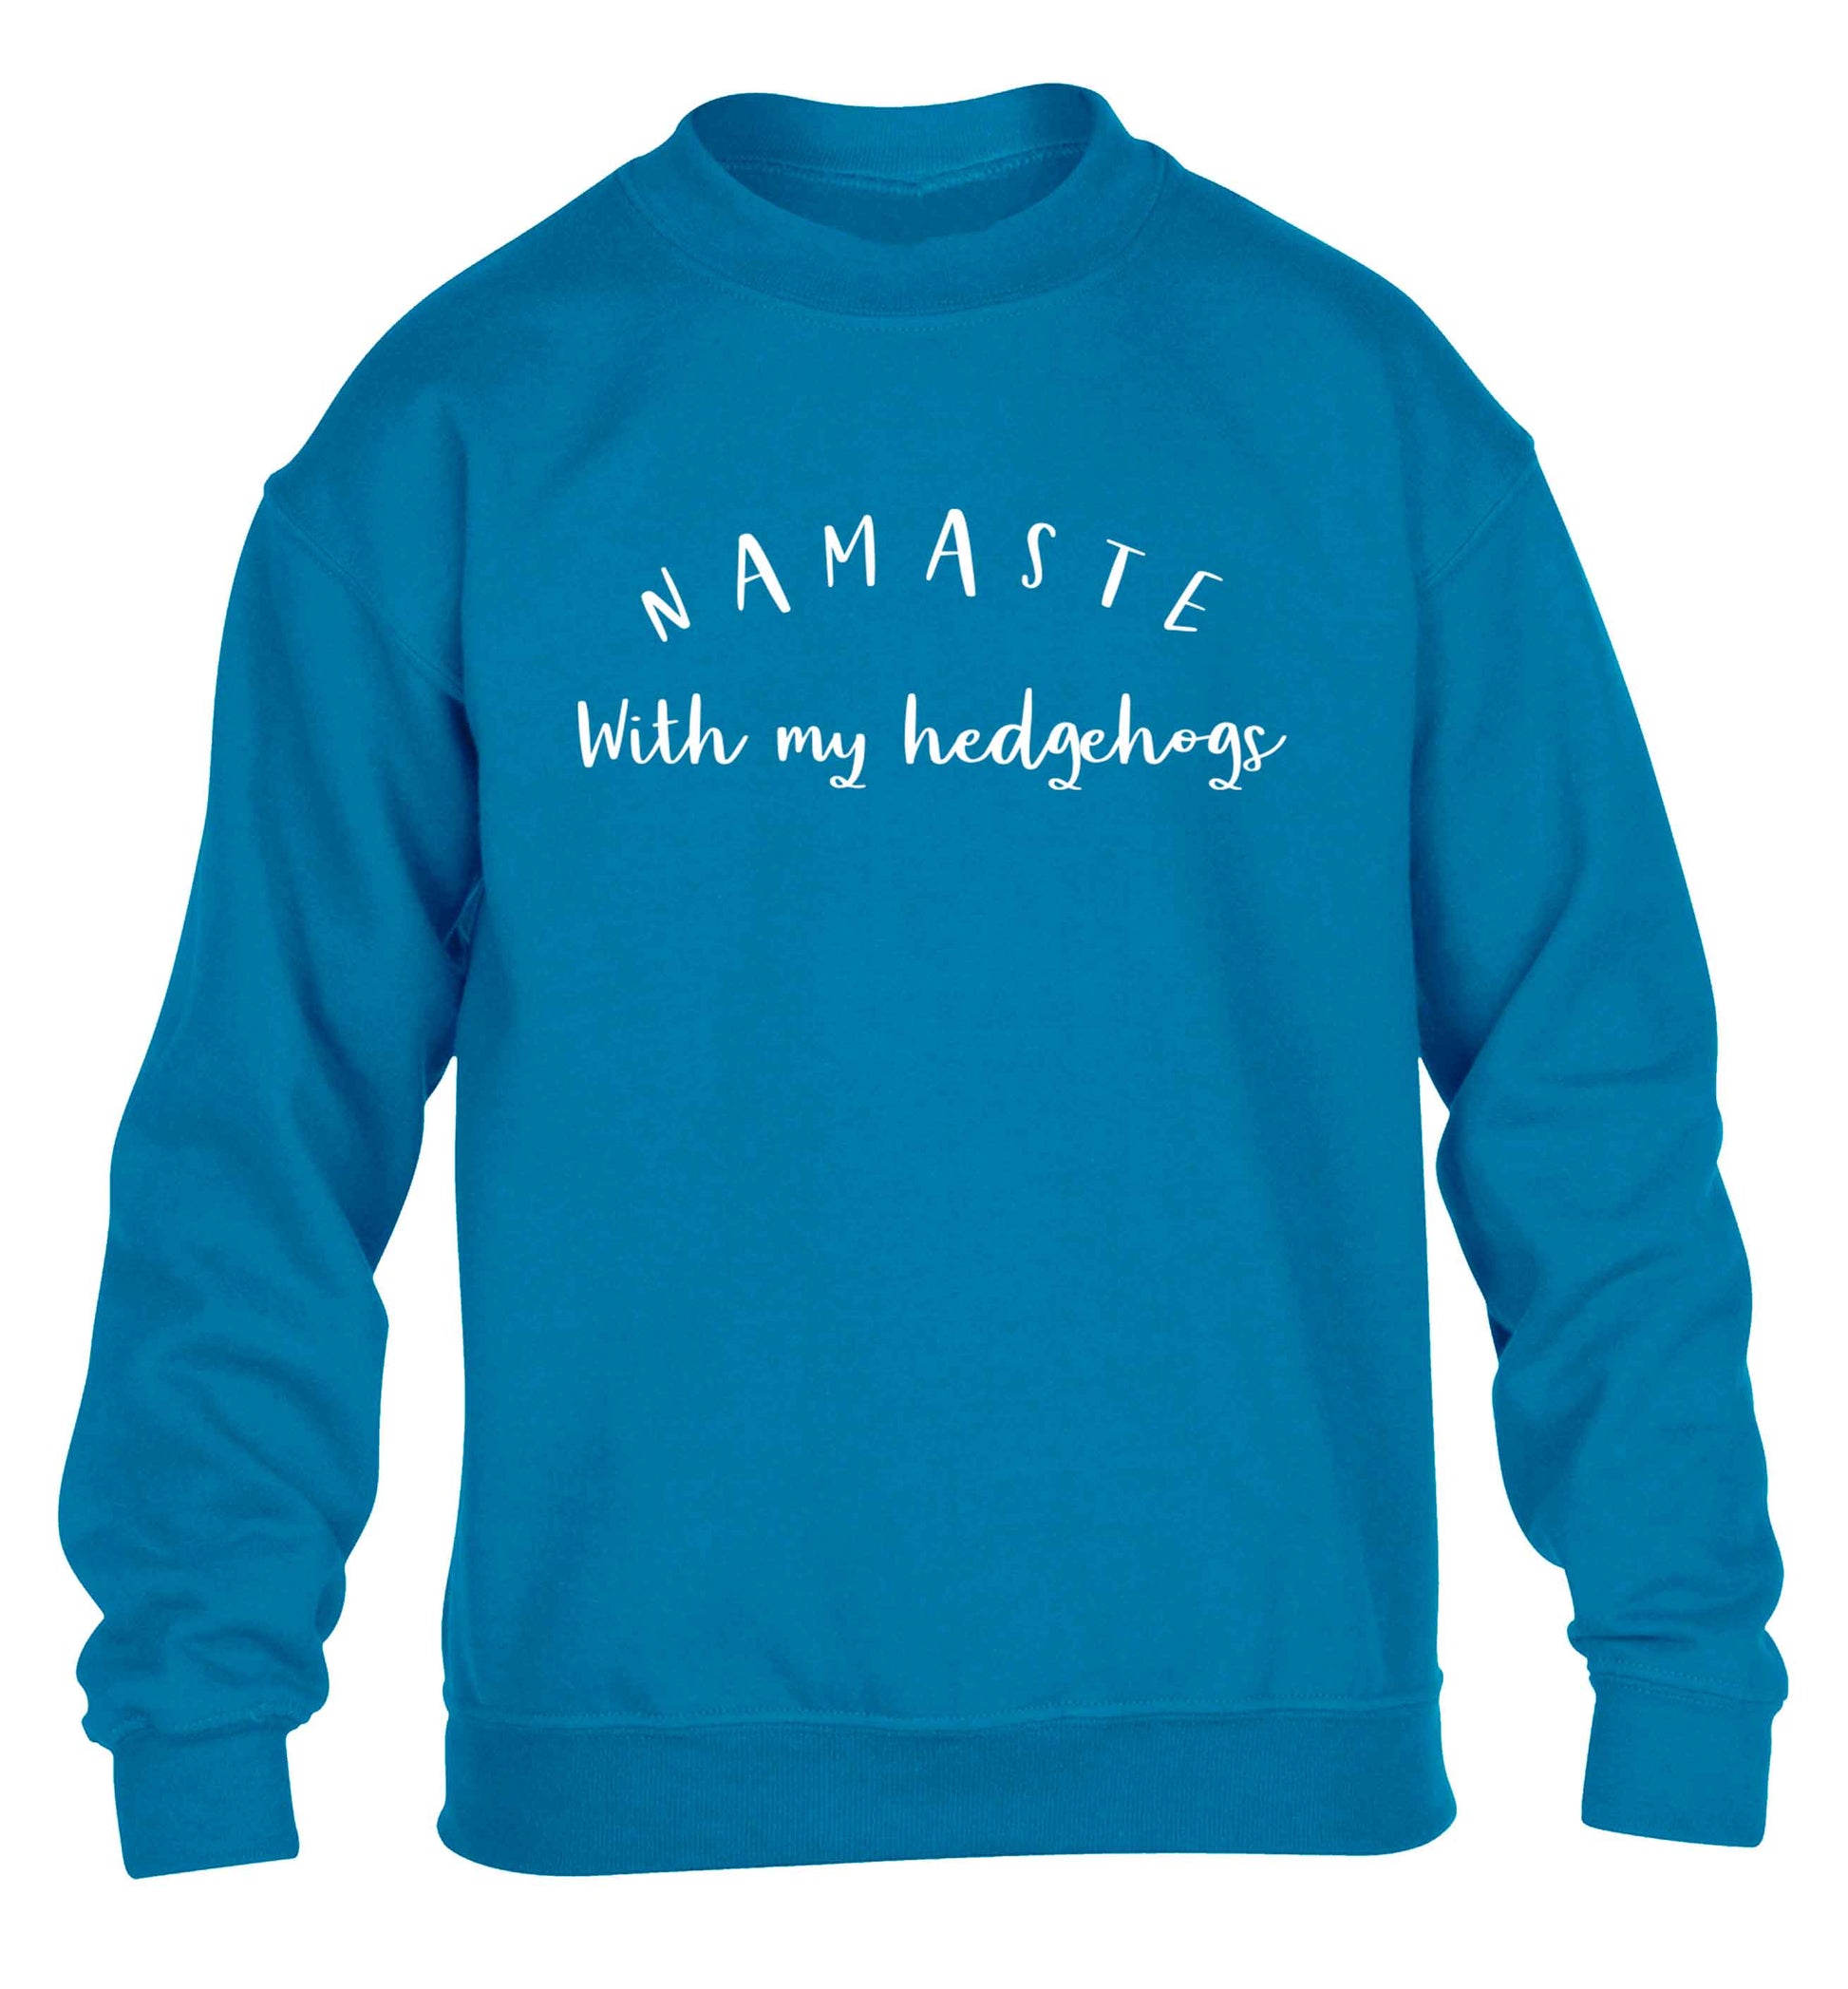 Namaste with my hedgehog children's blue sweater 12-13 Years